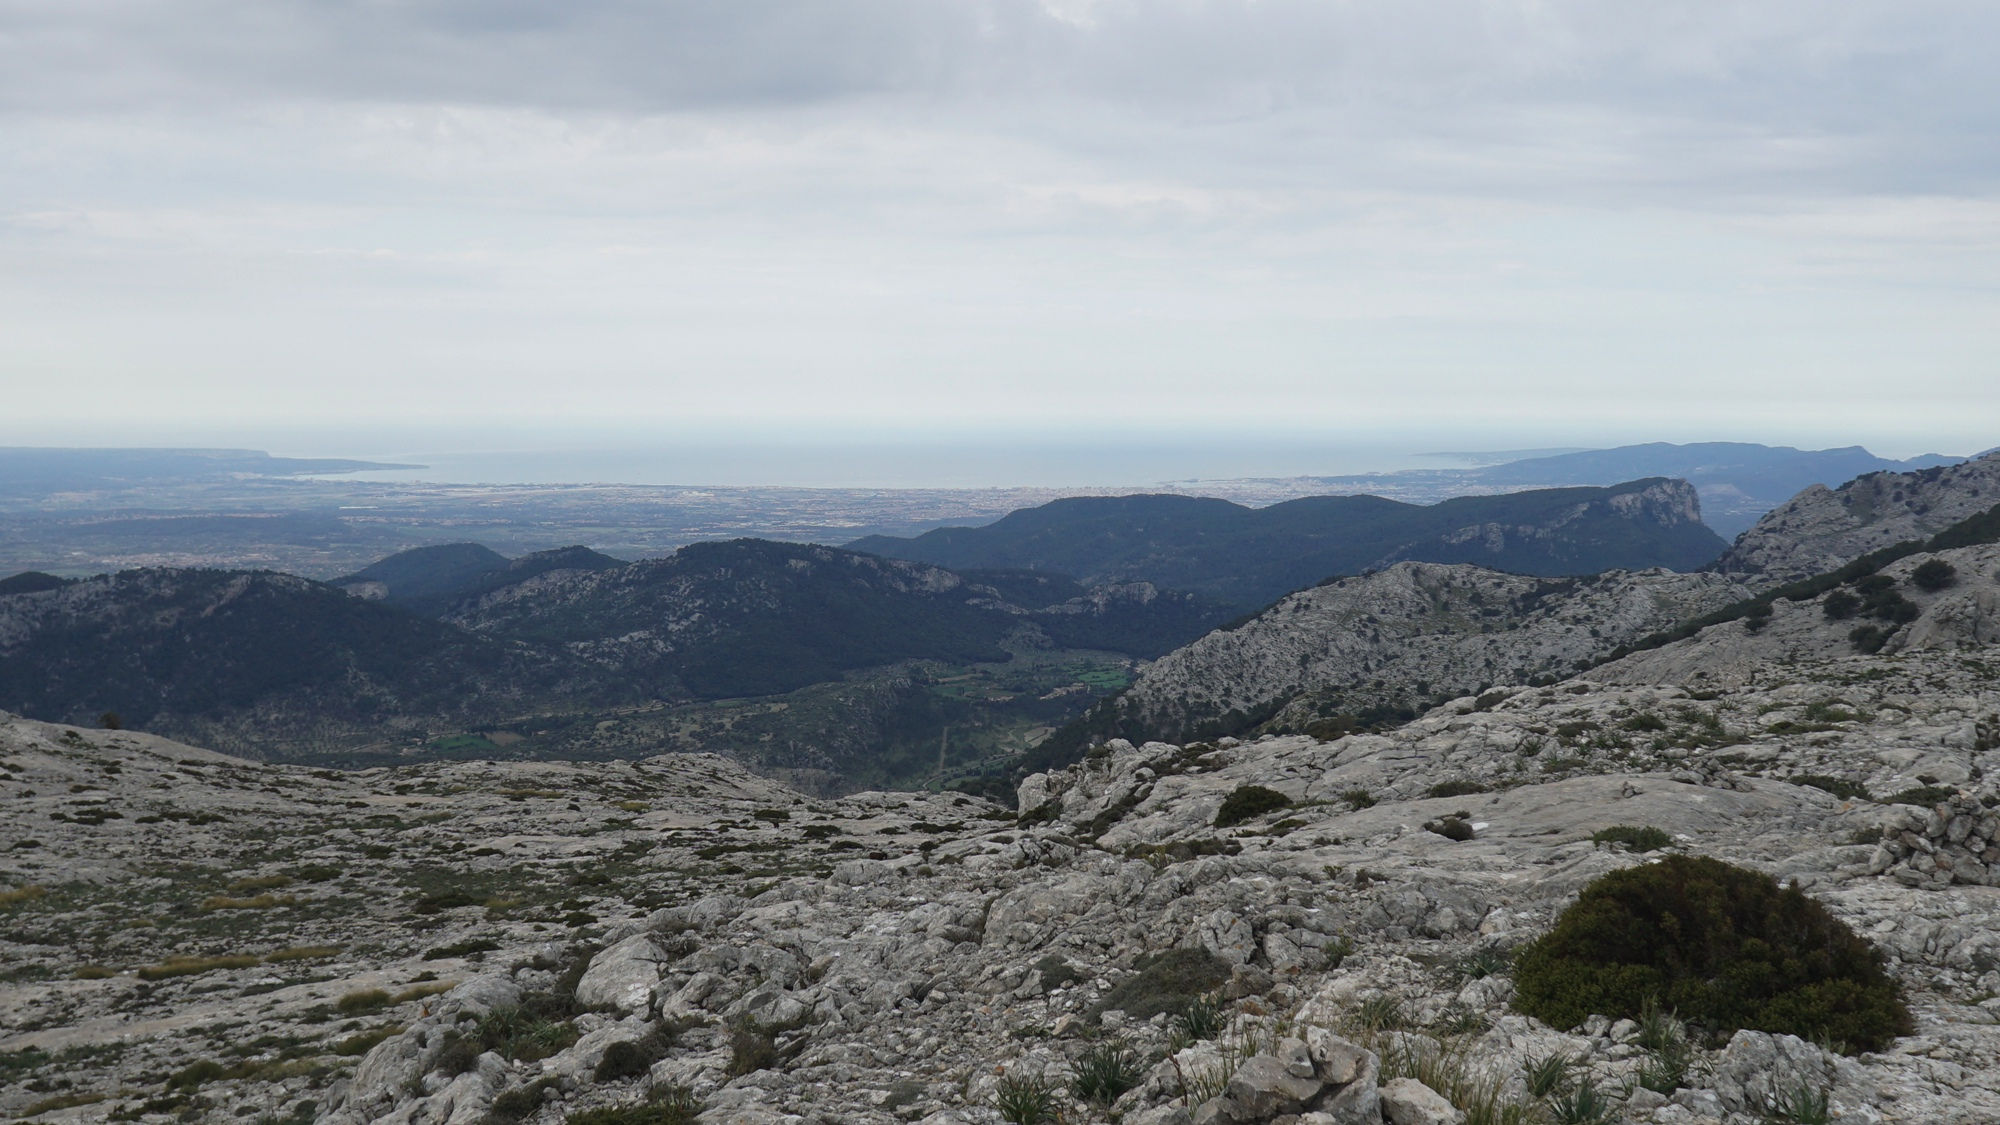 Der Blick vom Puig de sa Rateta nach Südosten auf den Platja de Palma.